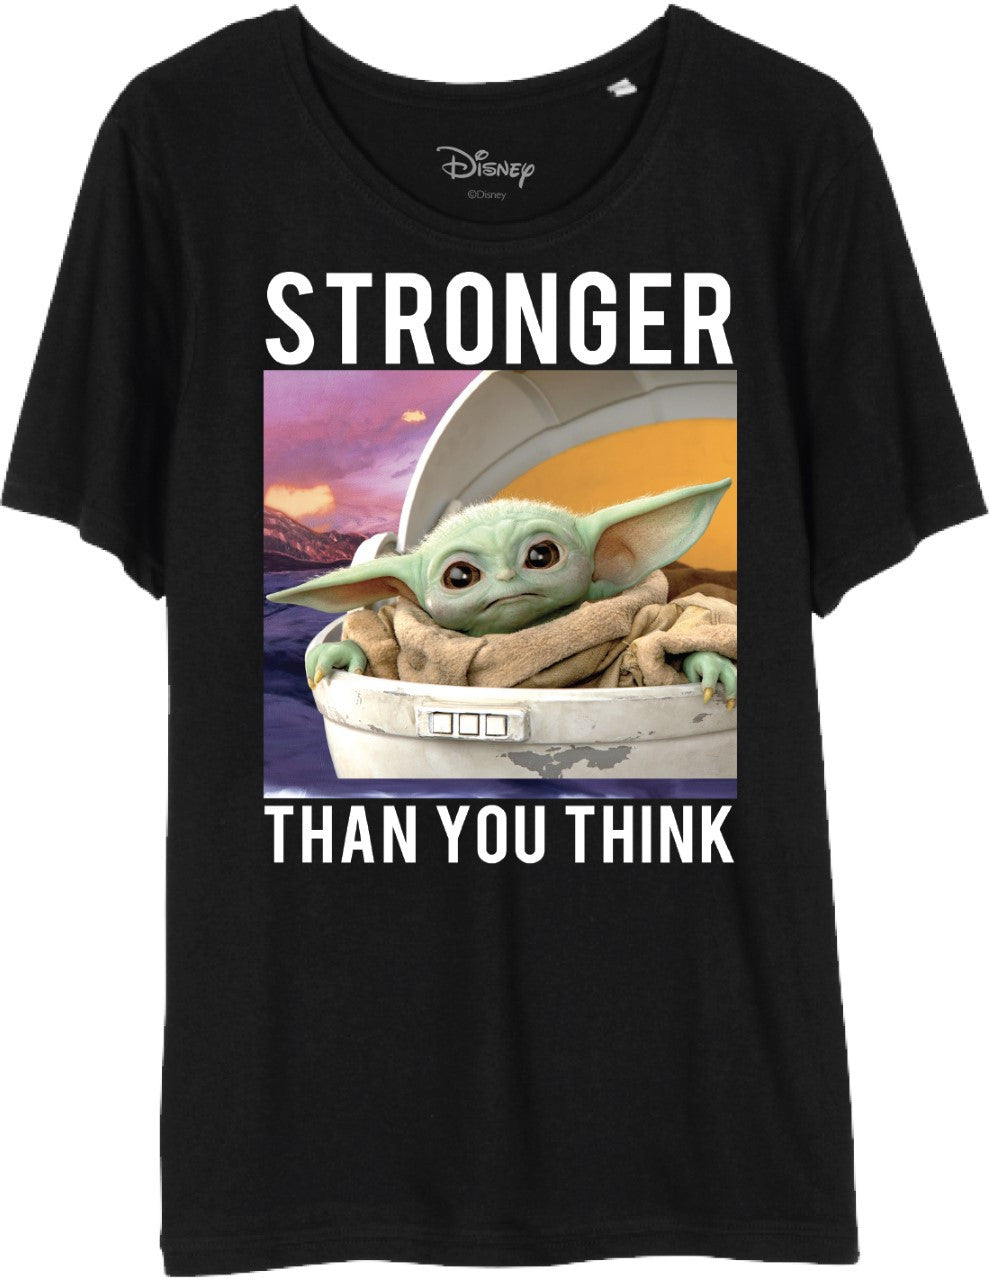 Star Wars Women's T-shirt - The Mandalorian - Stronger Than You Think